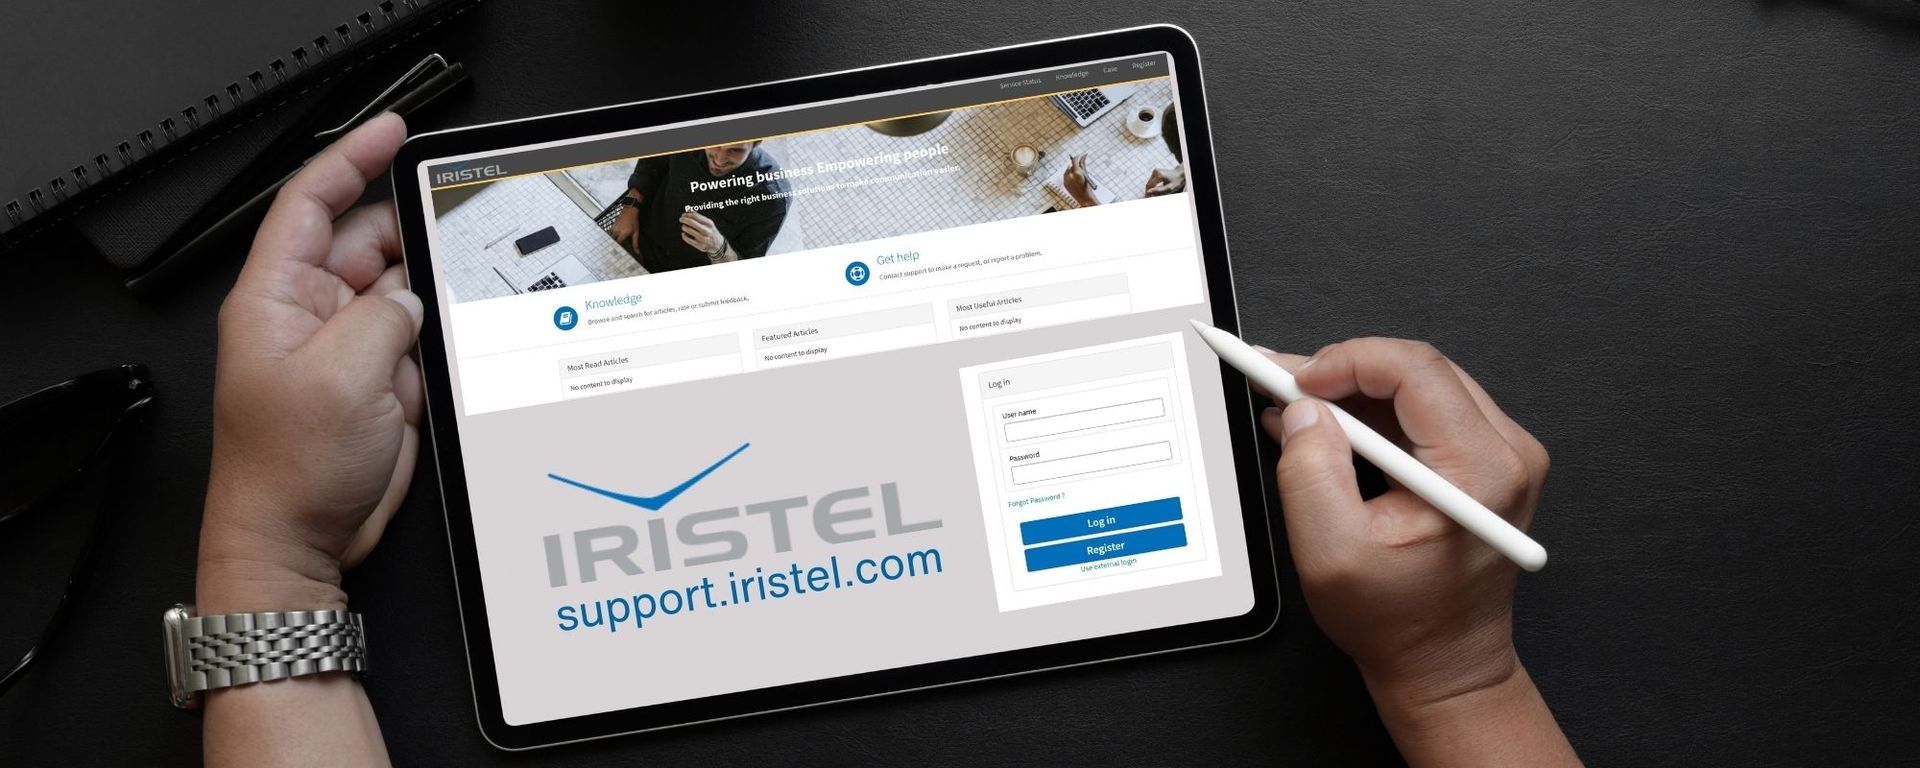 Iristel Support and Inquiry